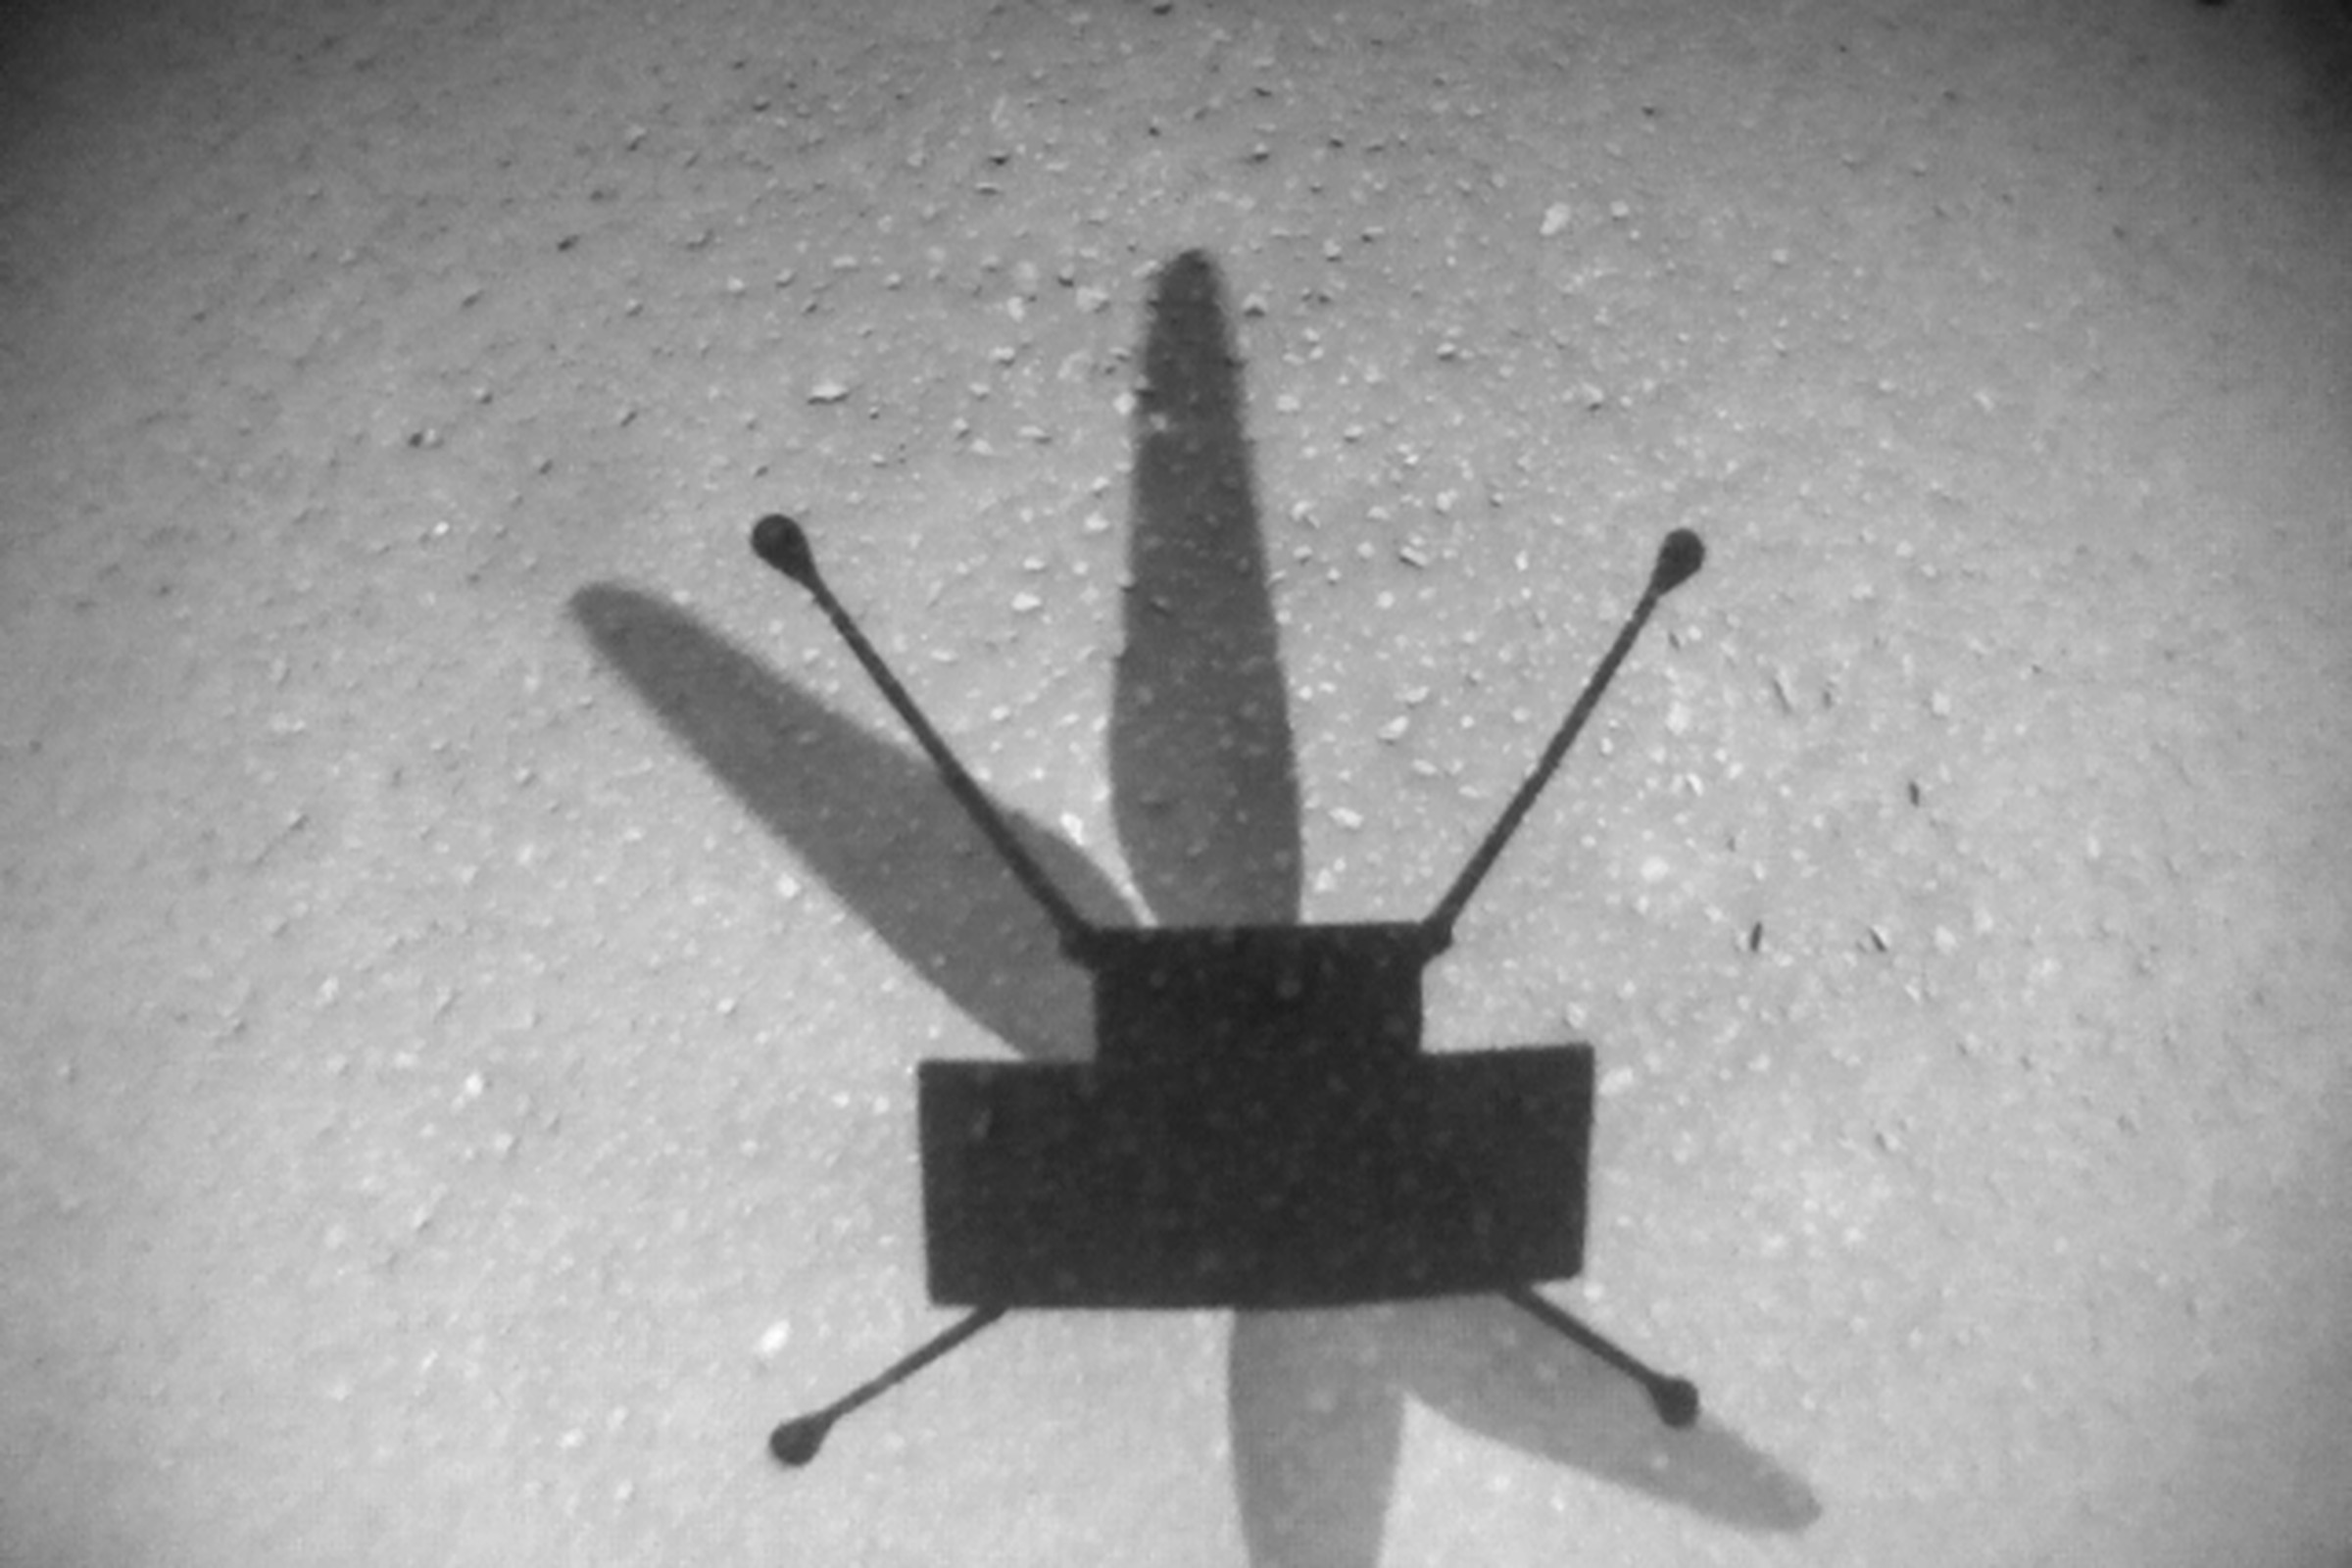 A frame from Ingenuity’s navigation camera during its ninth flight over Mars’ Séítah region.